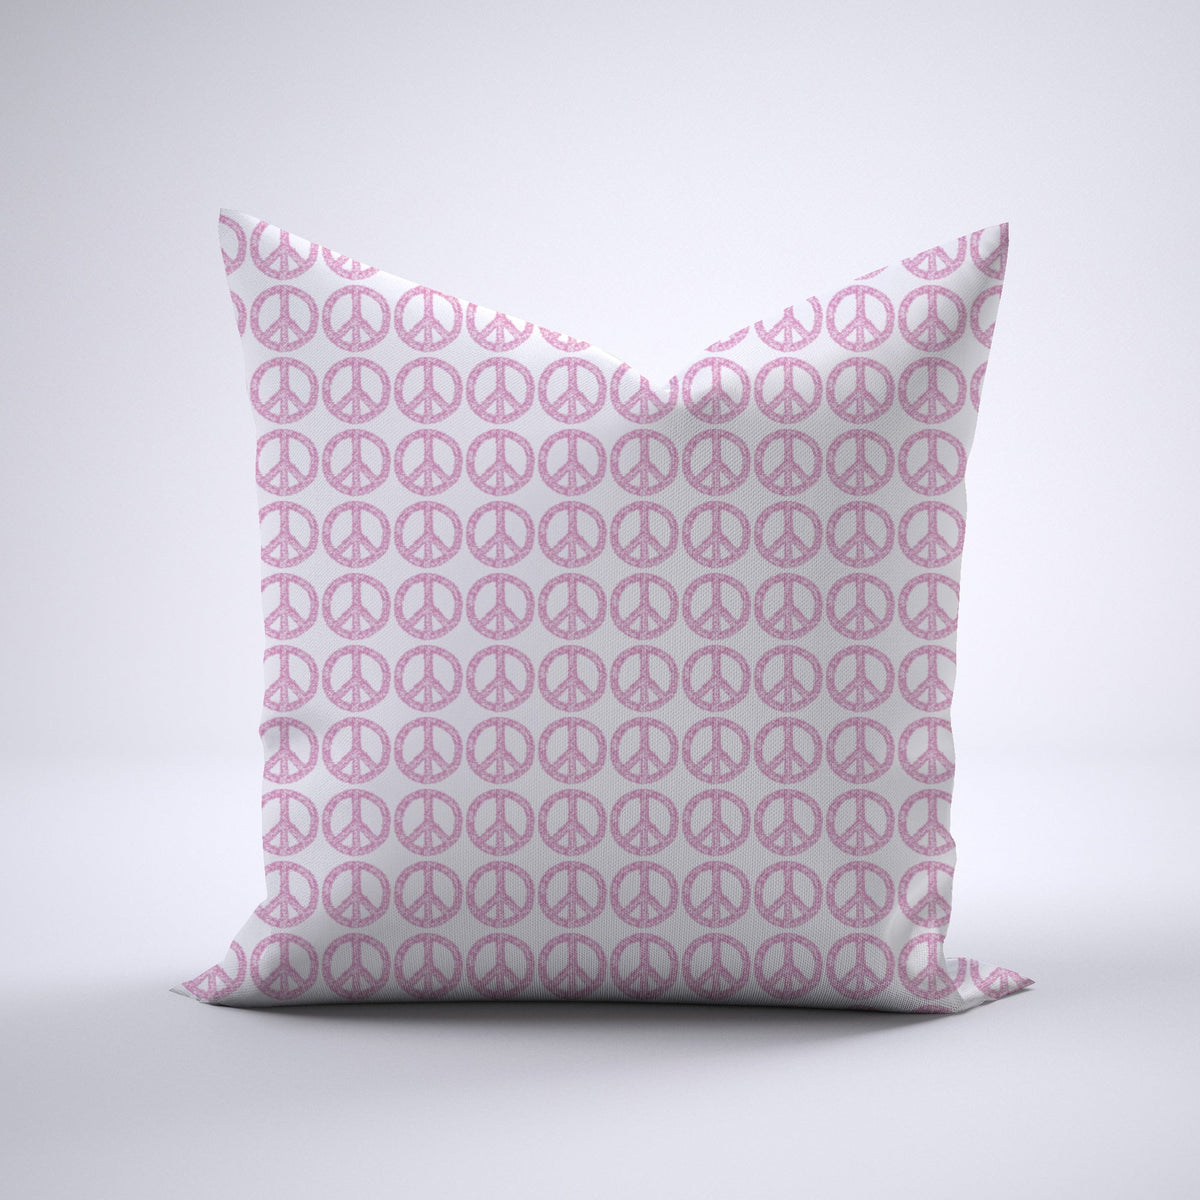 Throw Pillow - Peace Hot Pink Bedding, Pillows, Throw Pillows MWW 